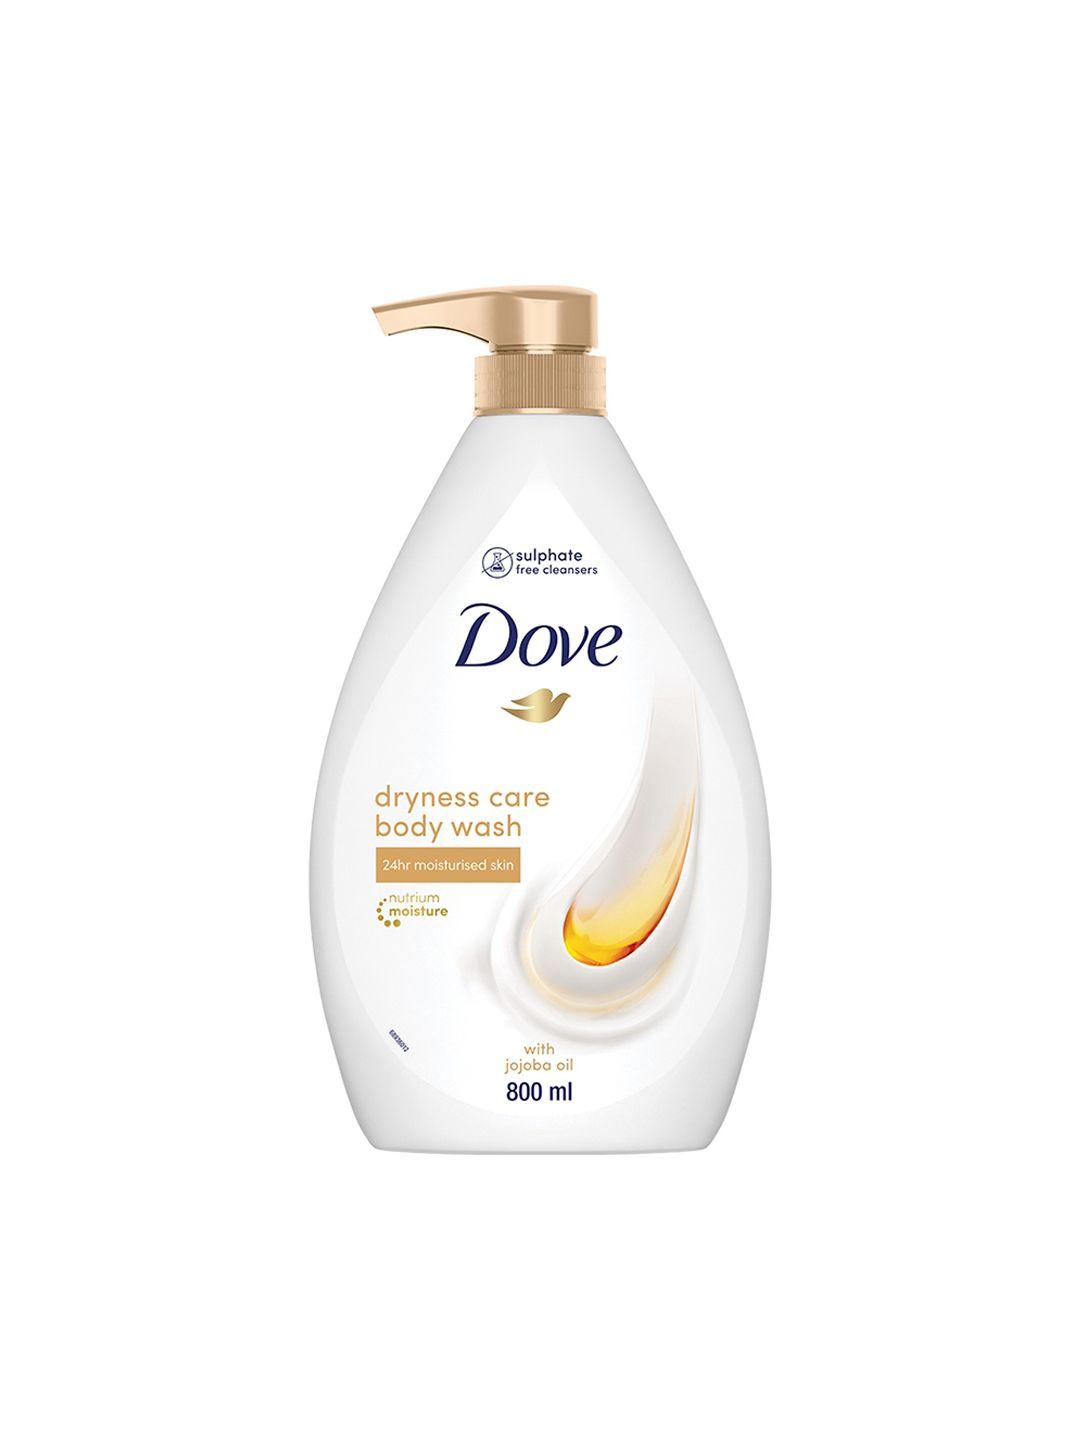 Dove Dryness Care Body Wash with Jojoba Oil for Moisturised Skin - 800ml